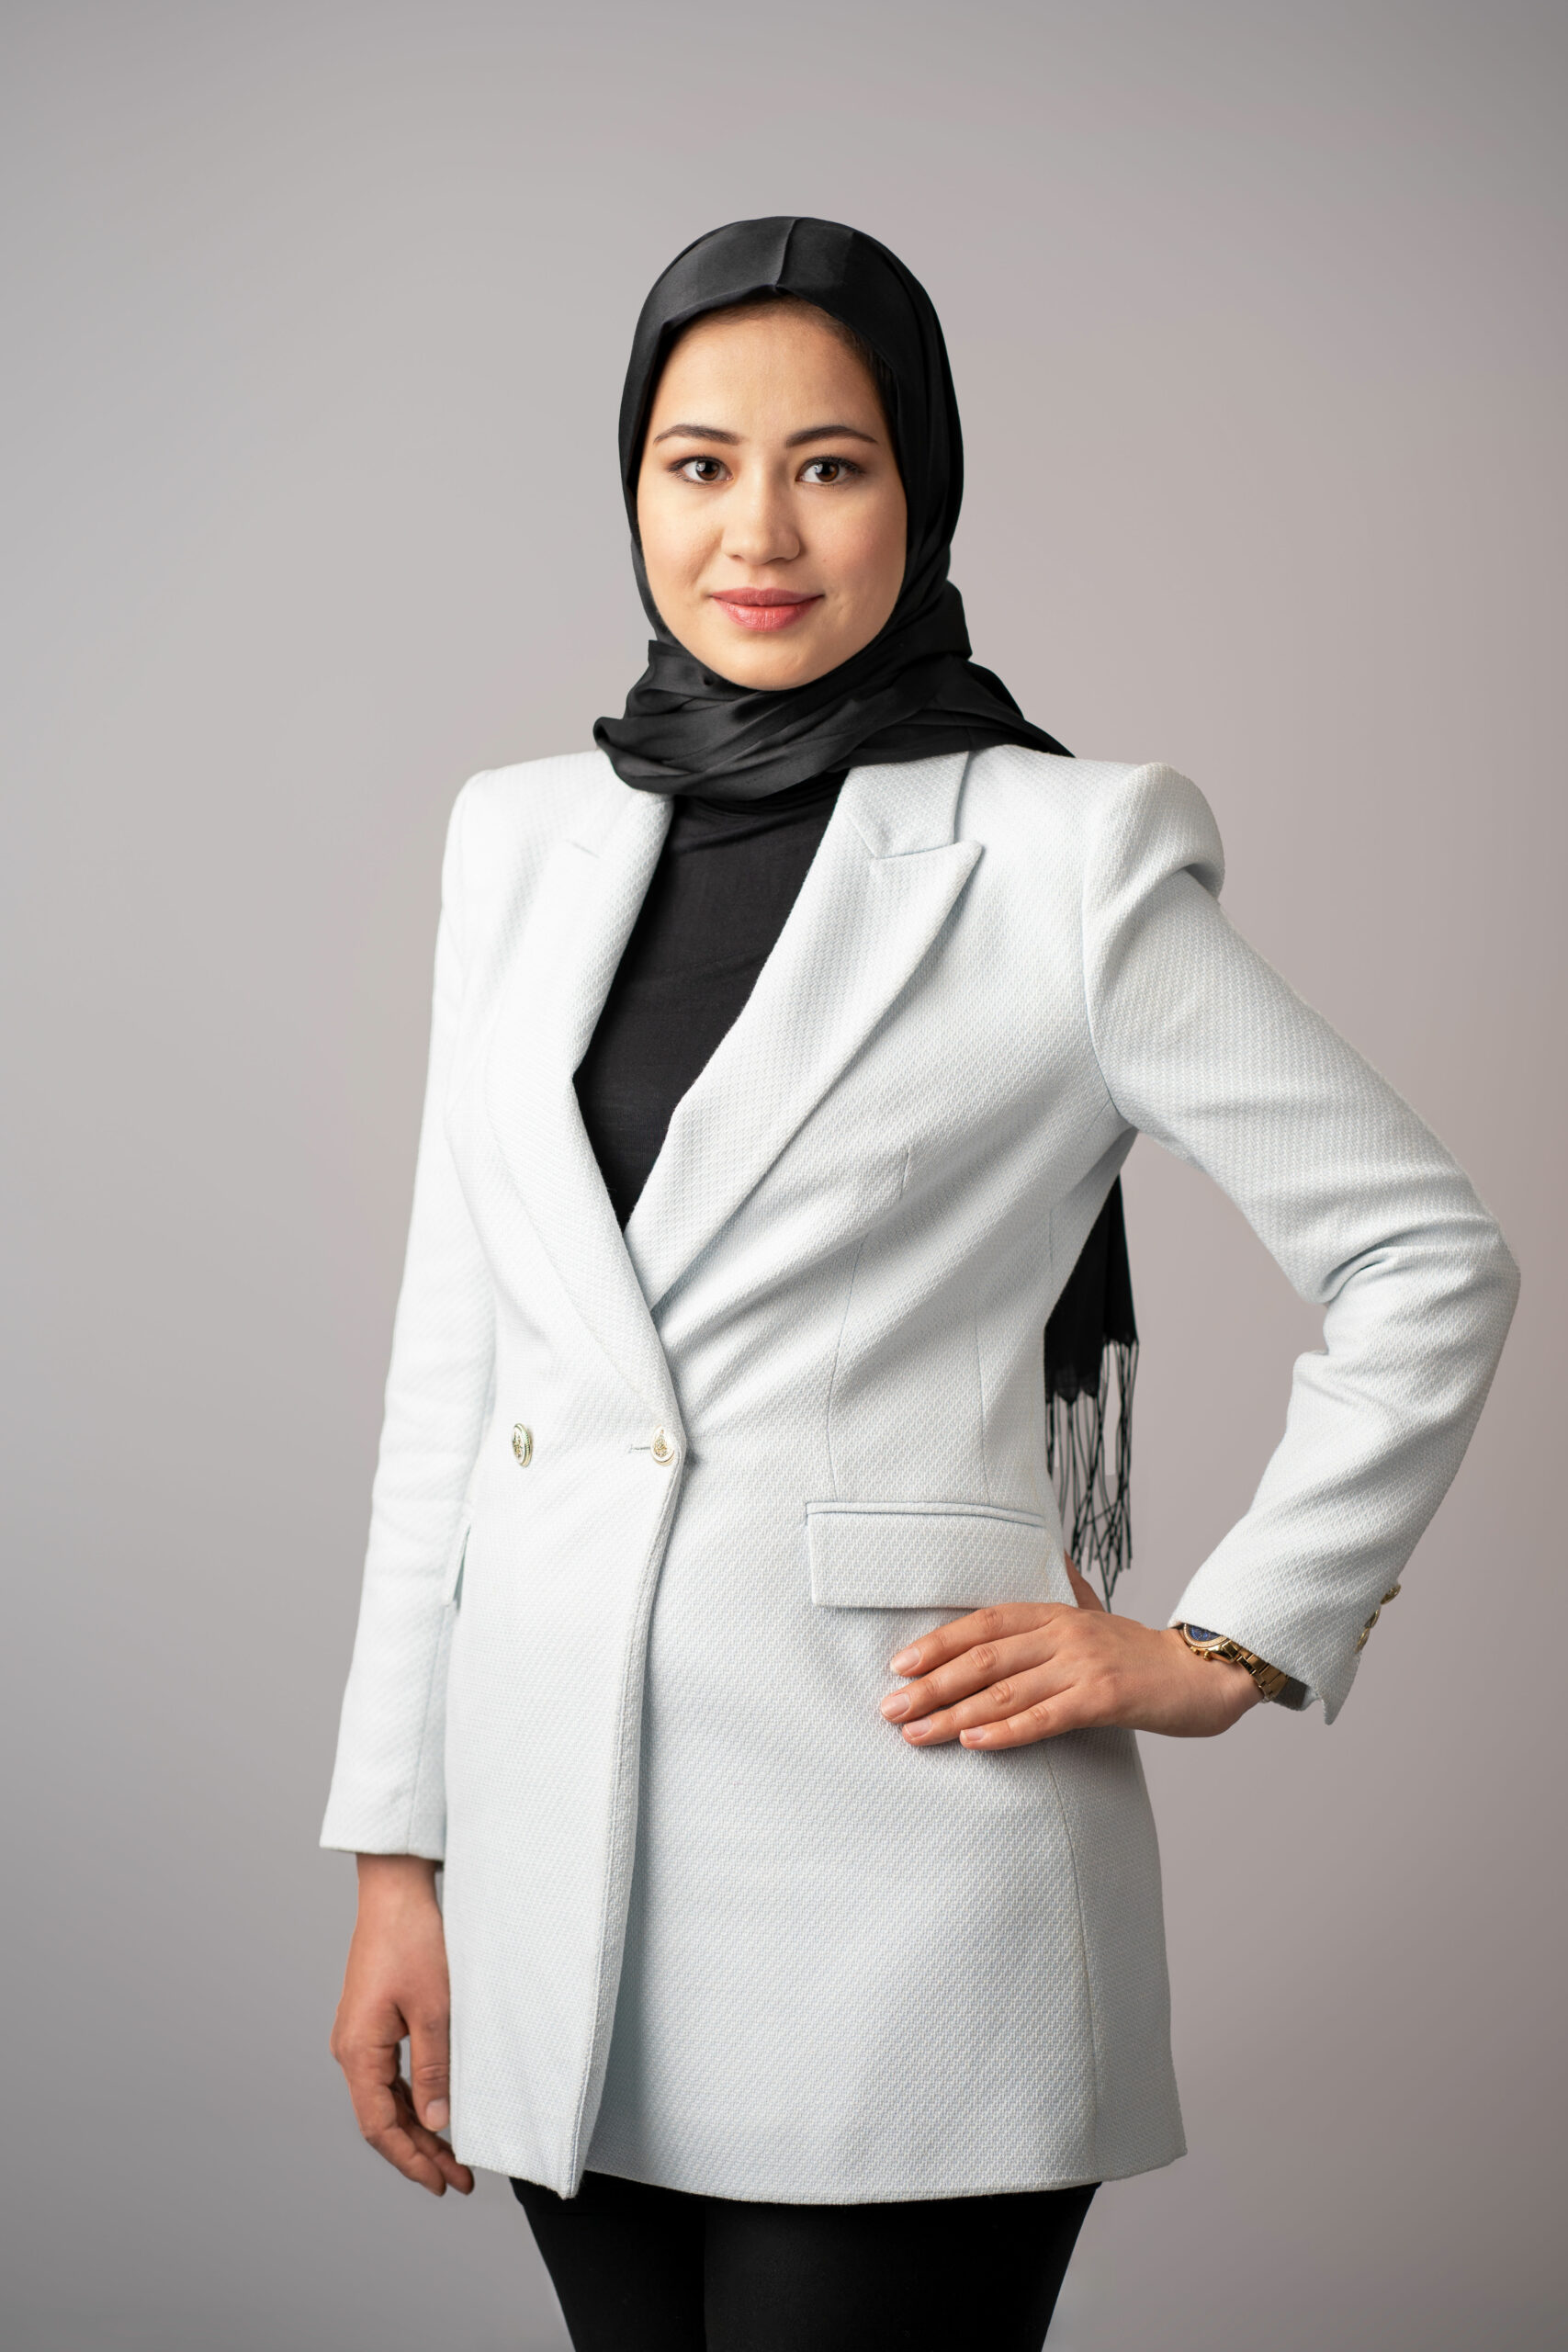 Zahra Muhammadi